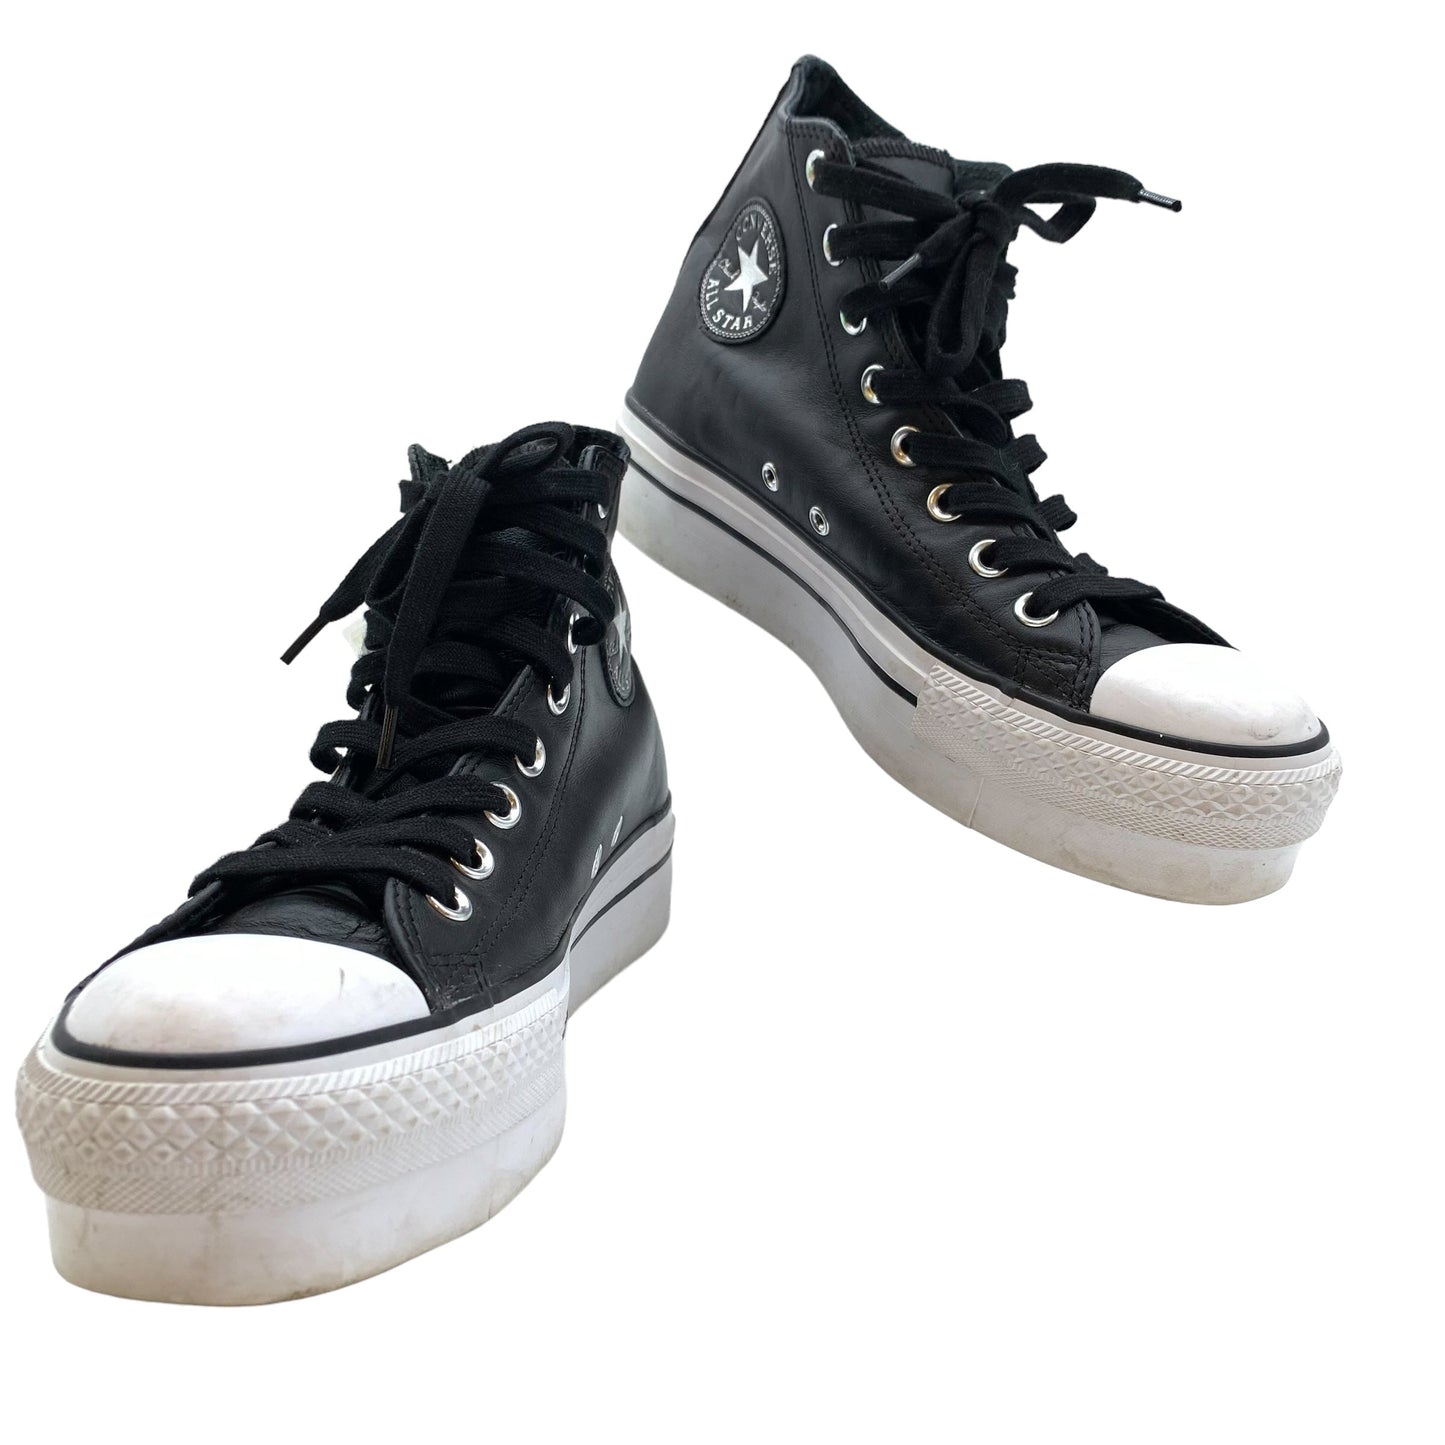 Black & Grey Shoes Sneakers Platform Converse, Size 8.5